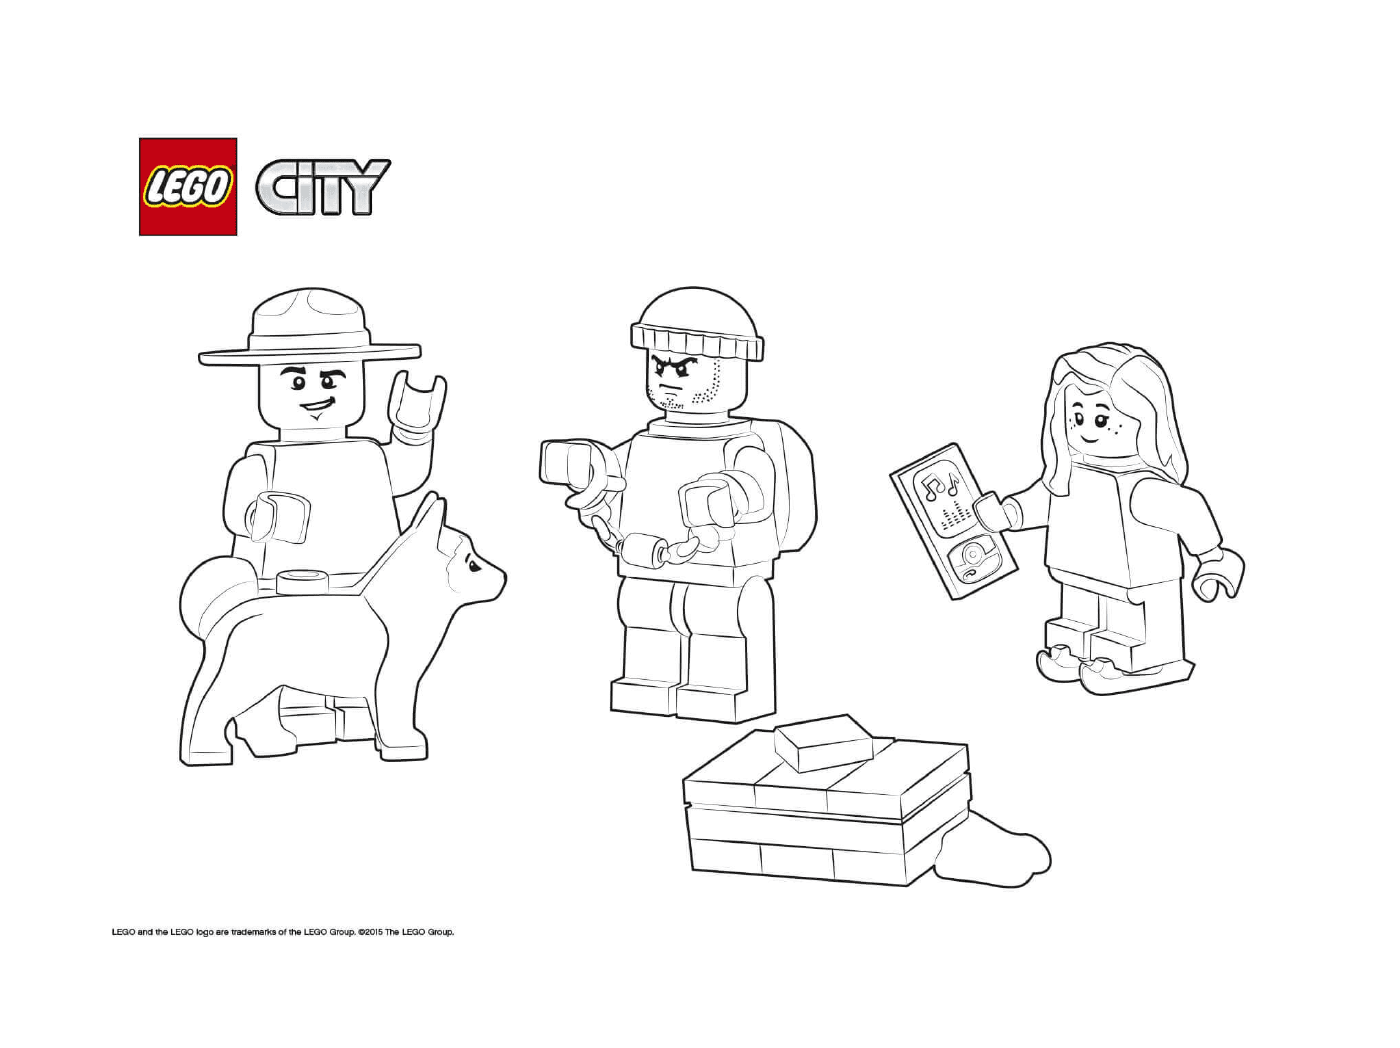  Cherif Lego City e prigioniero 